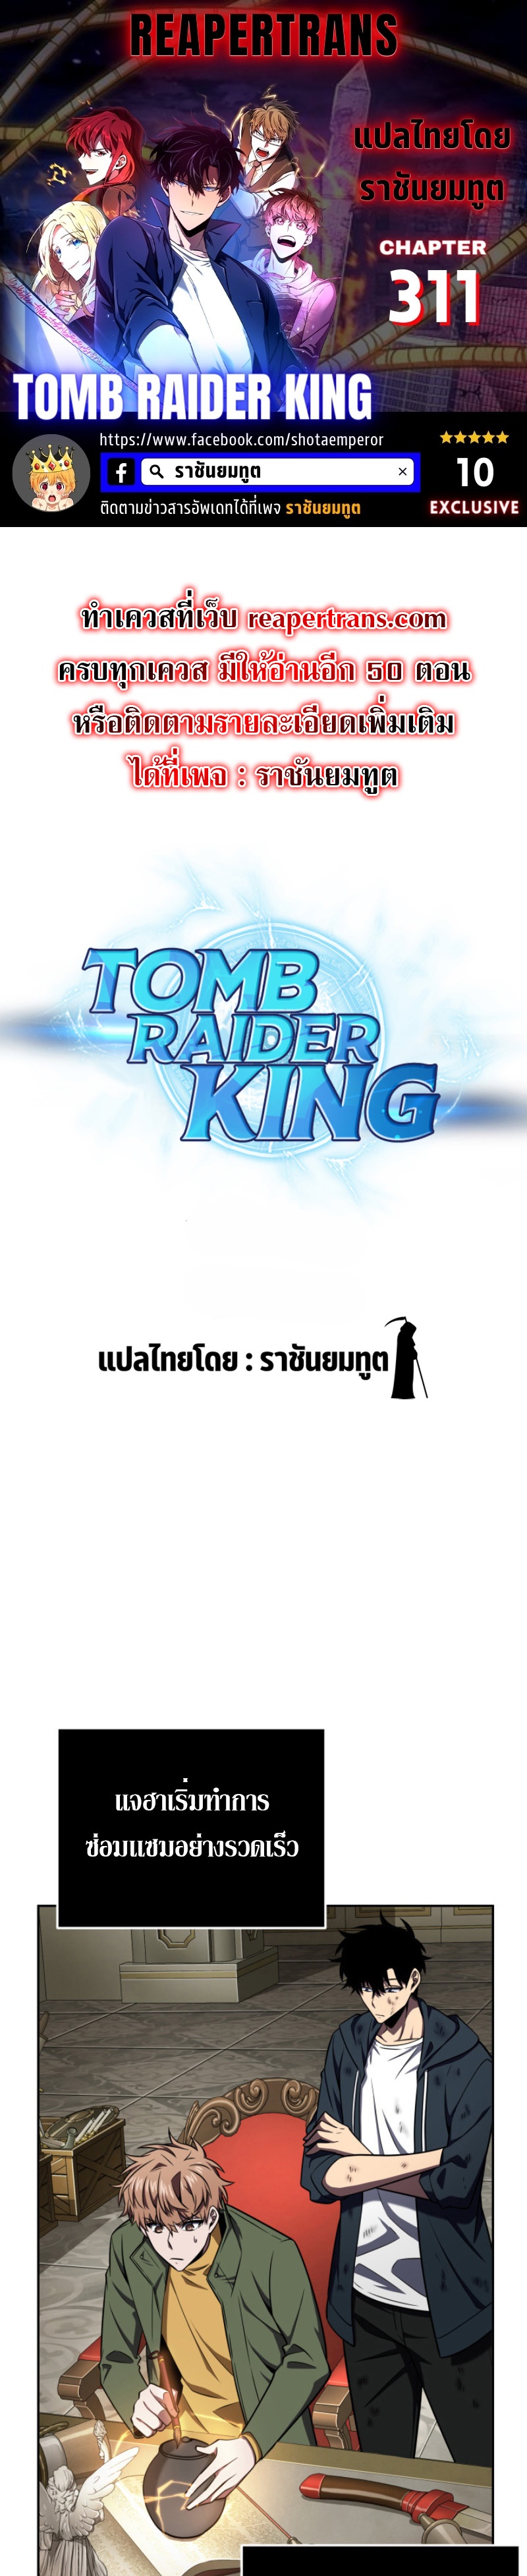 tomb raider king 311.01